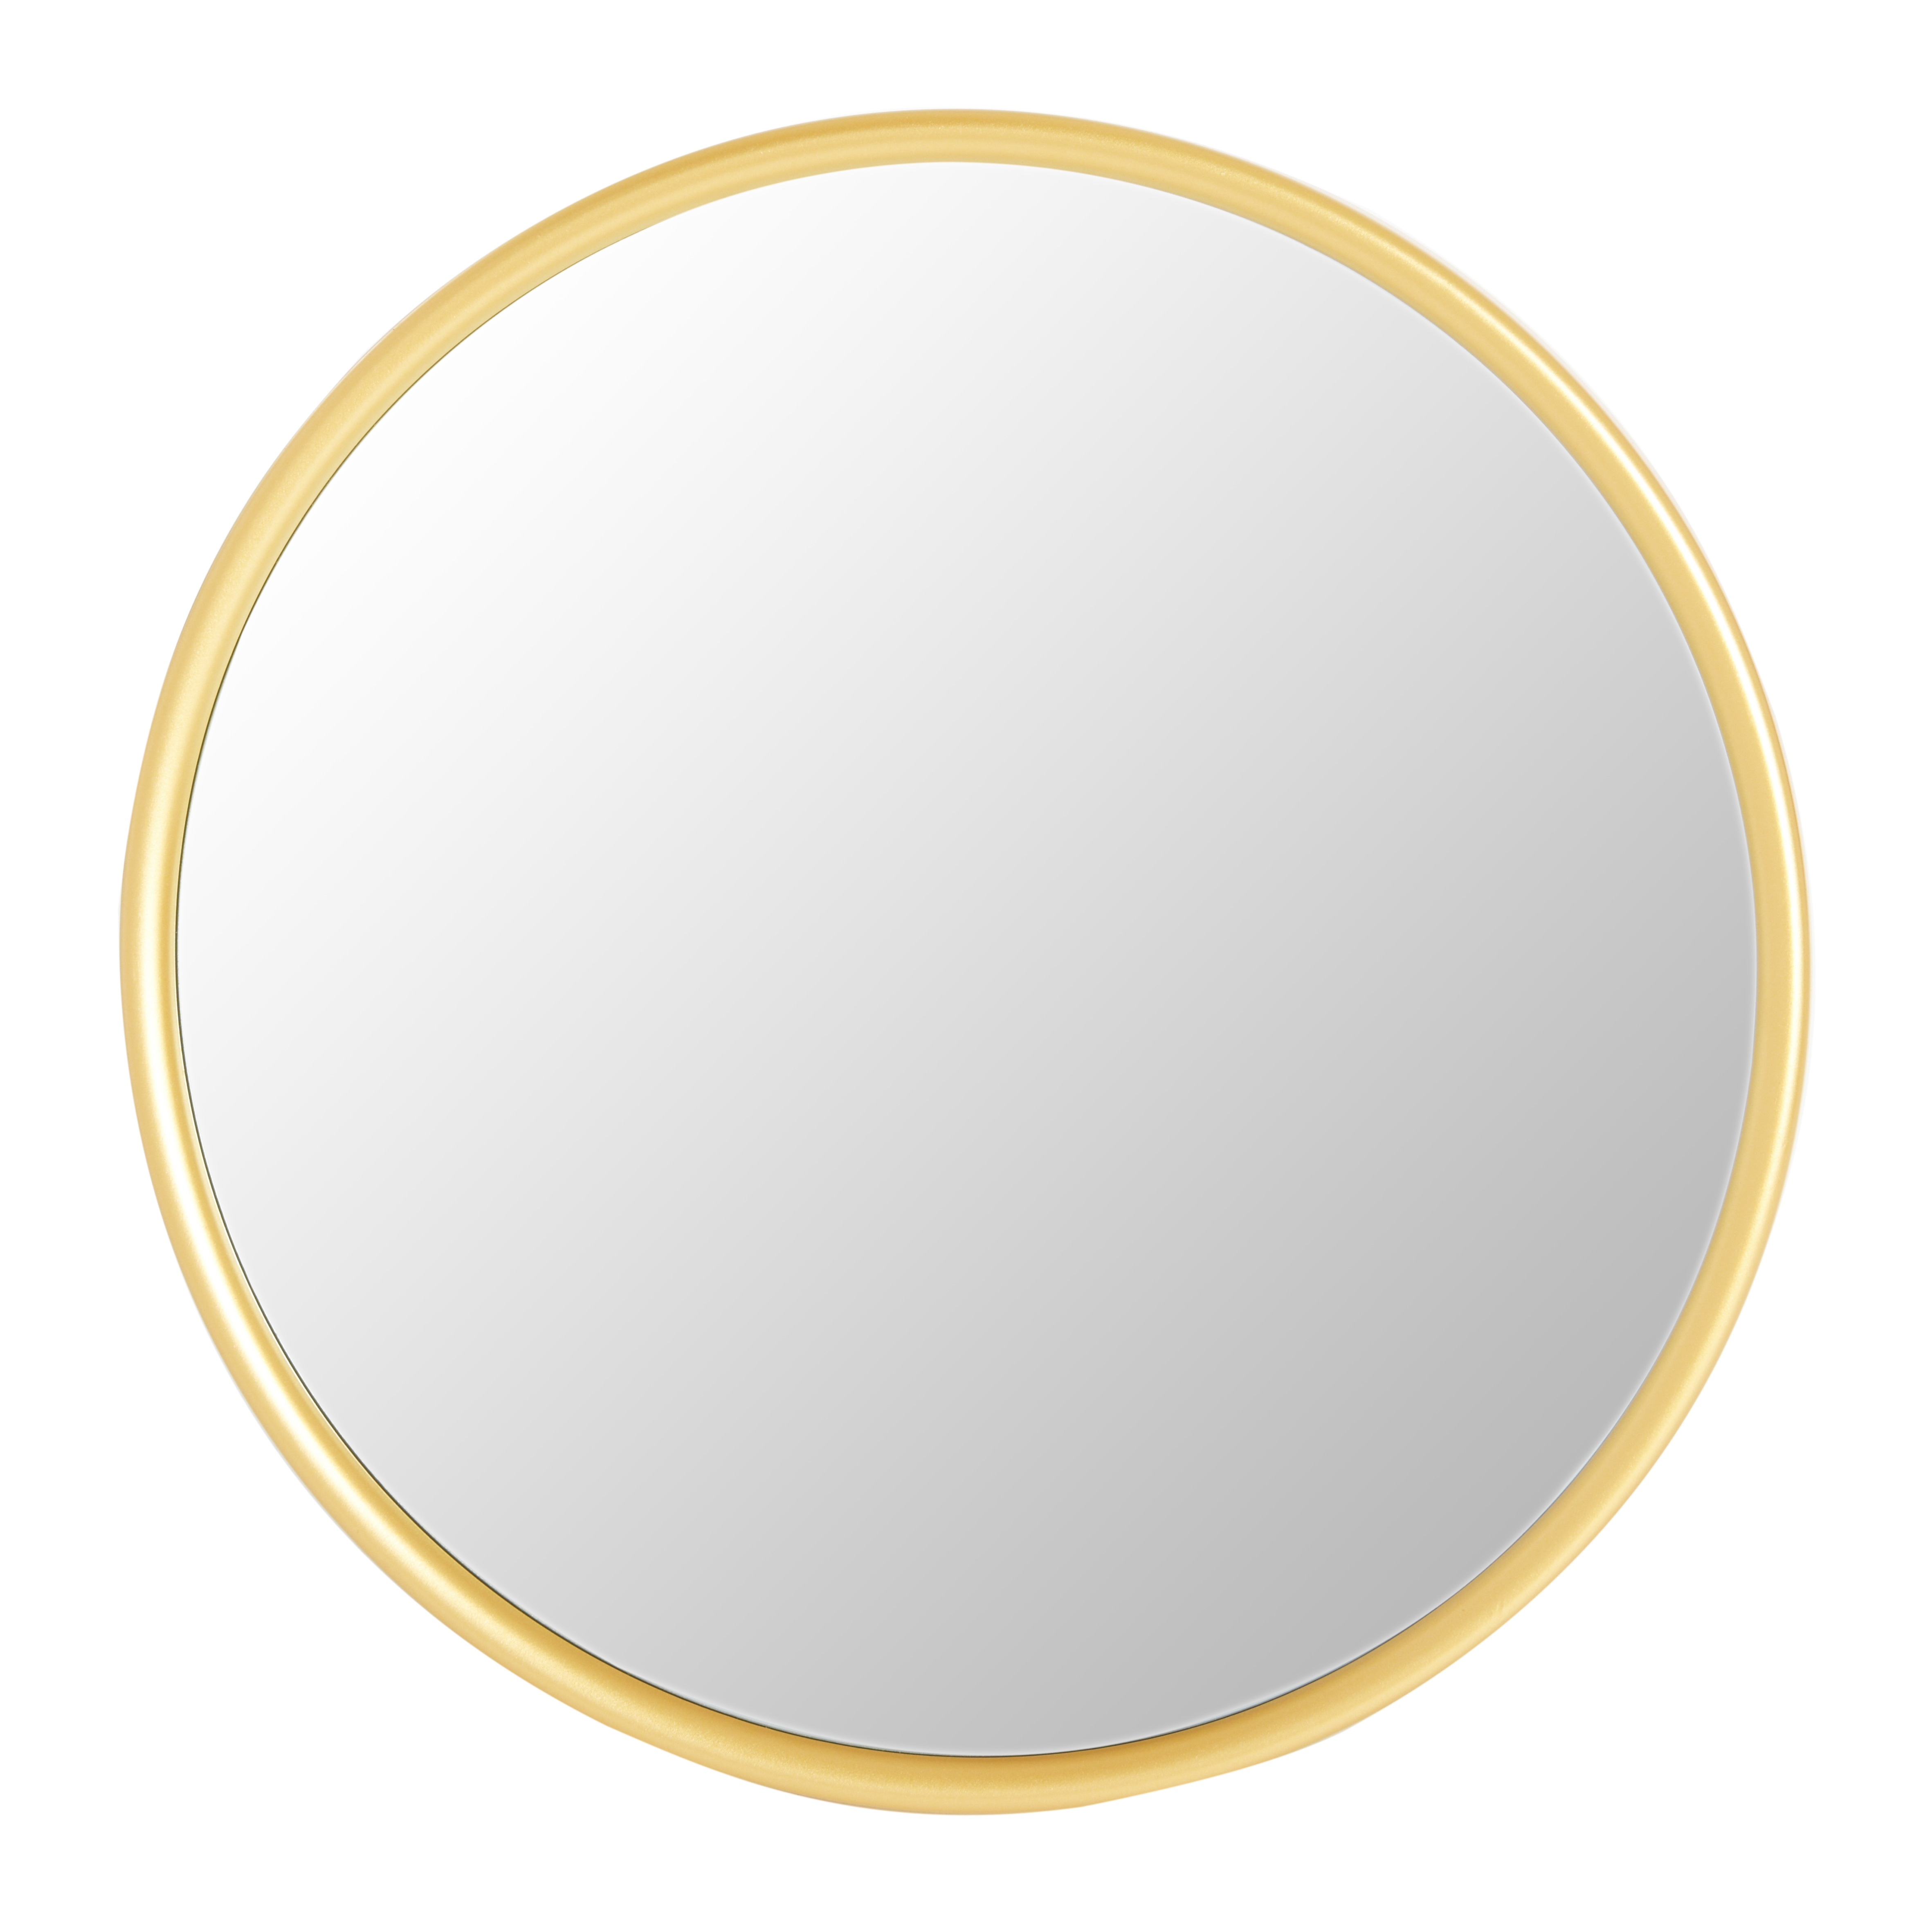 Round Metal Wall Mirror, Gold Finish - Image 0